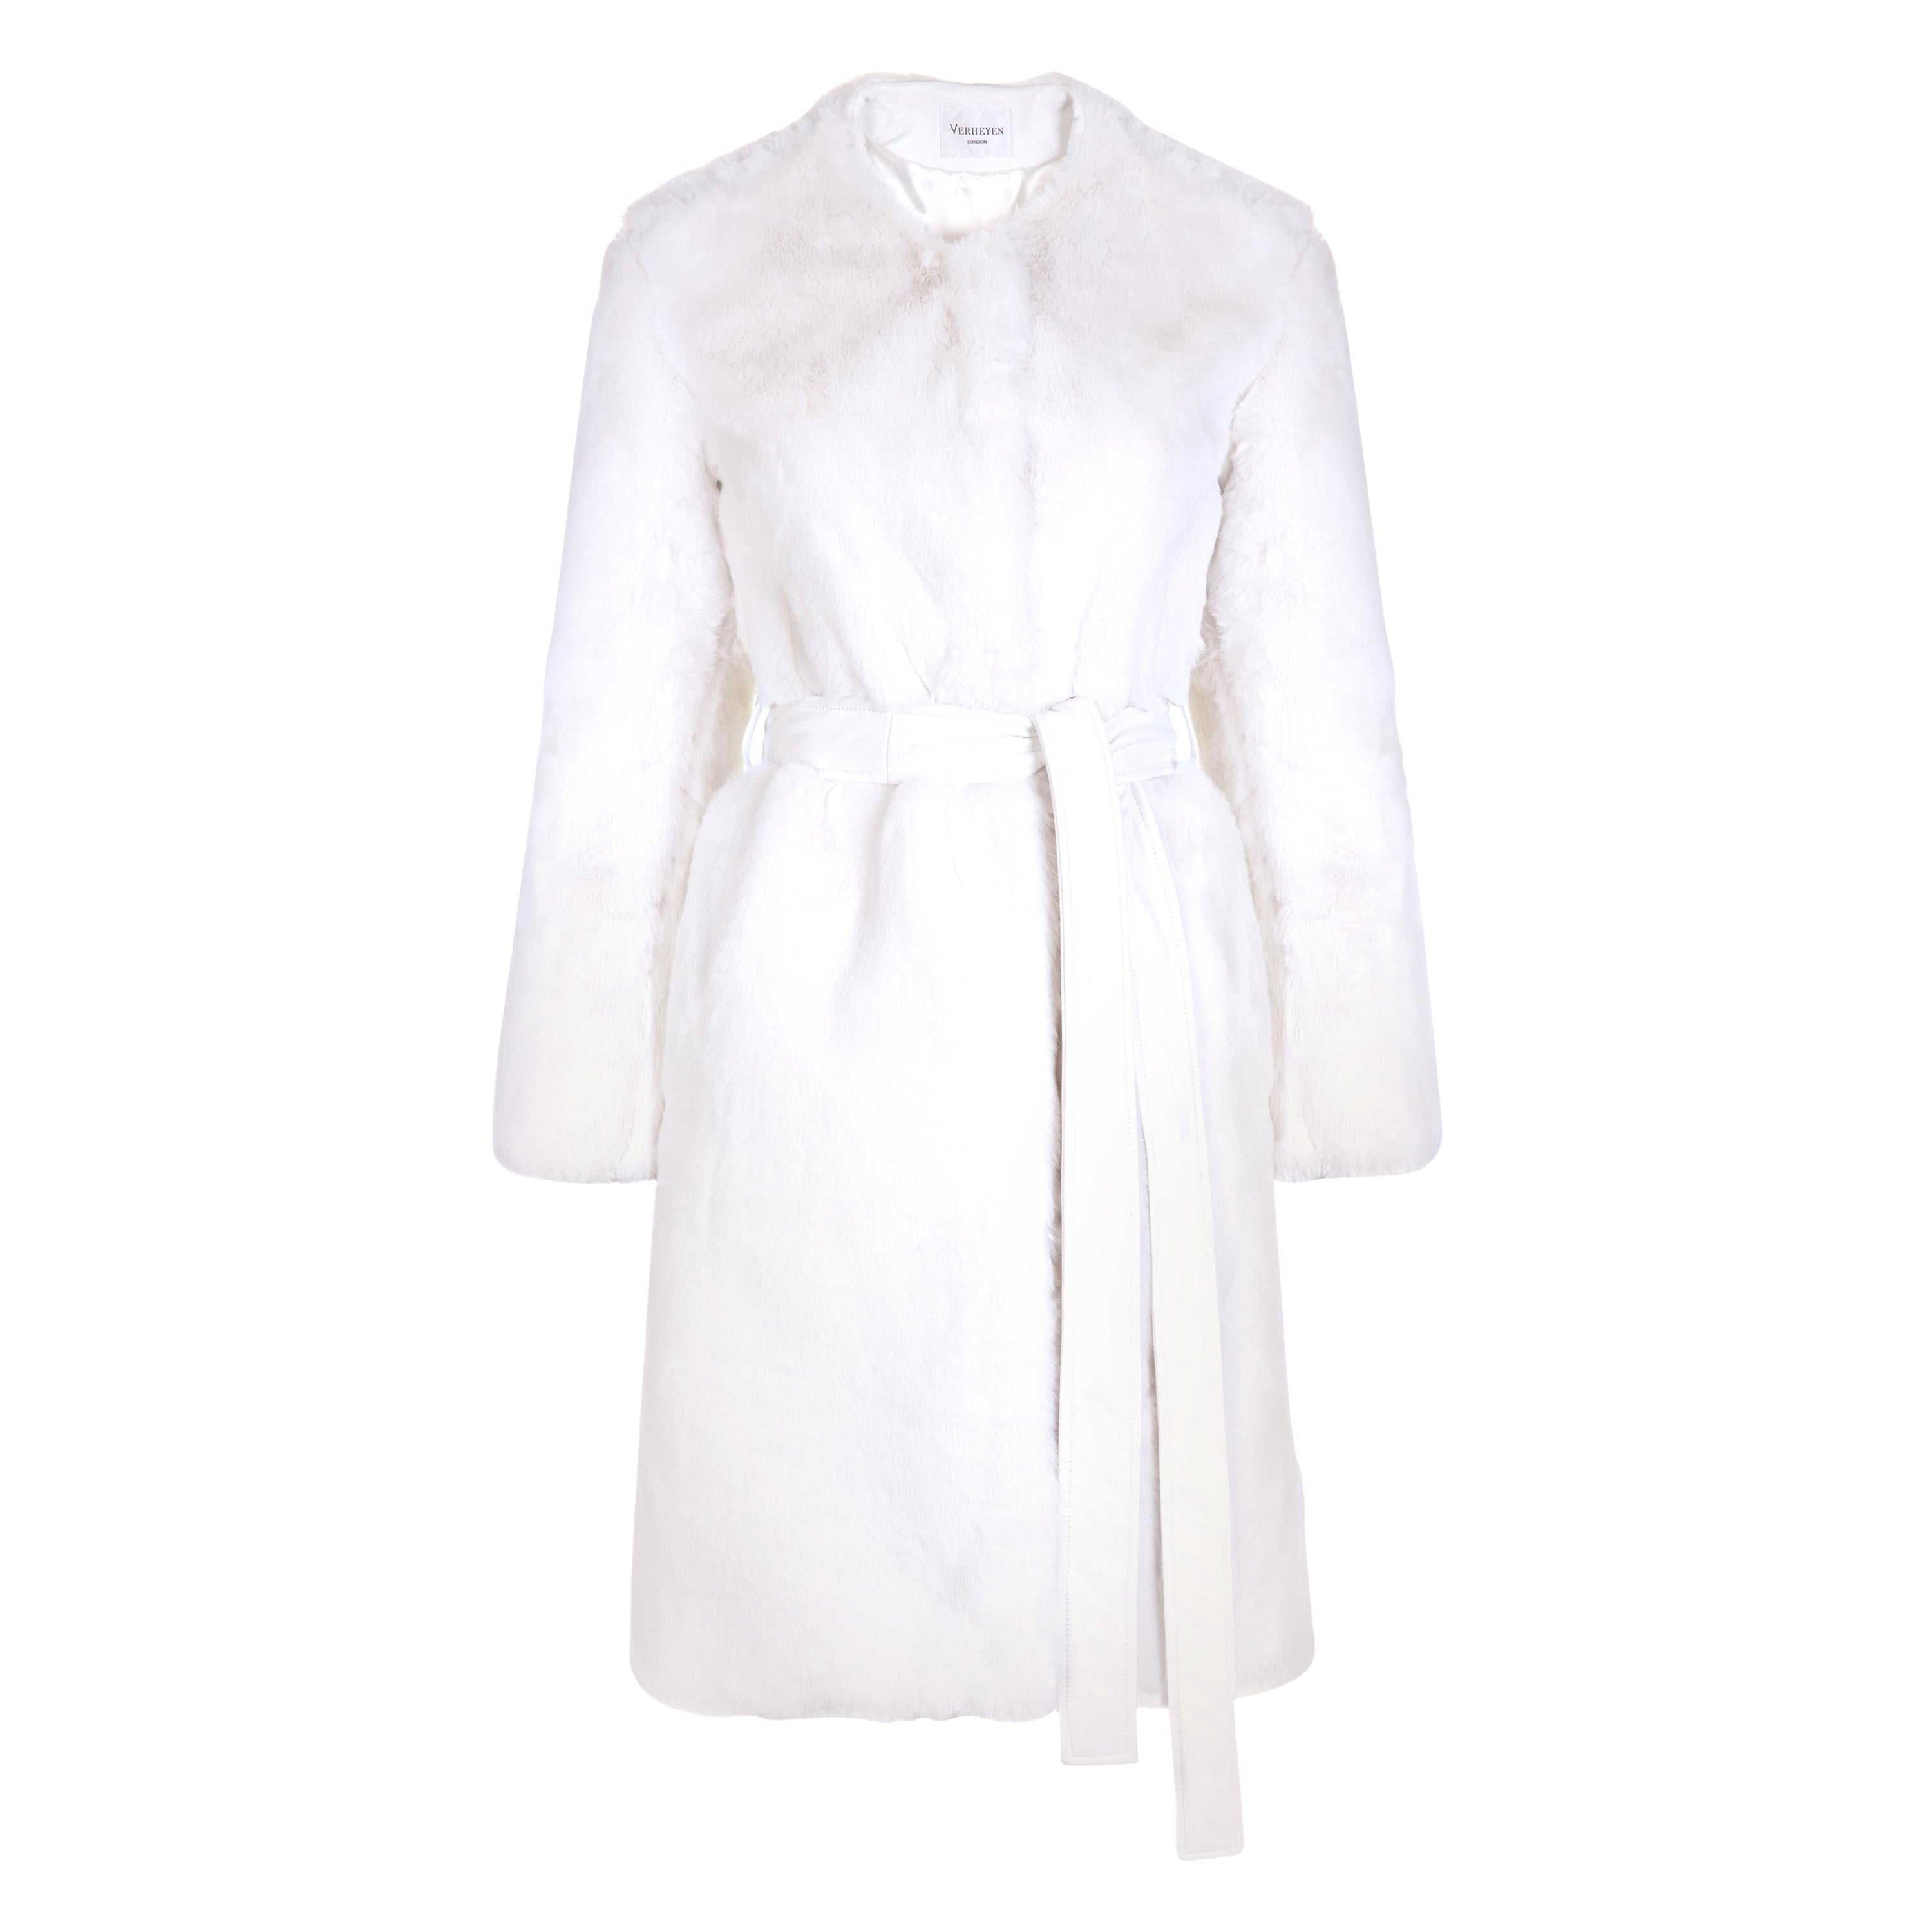 Verheyen London Serena  Collarless Faux Fur Coat in White - Size uk 14